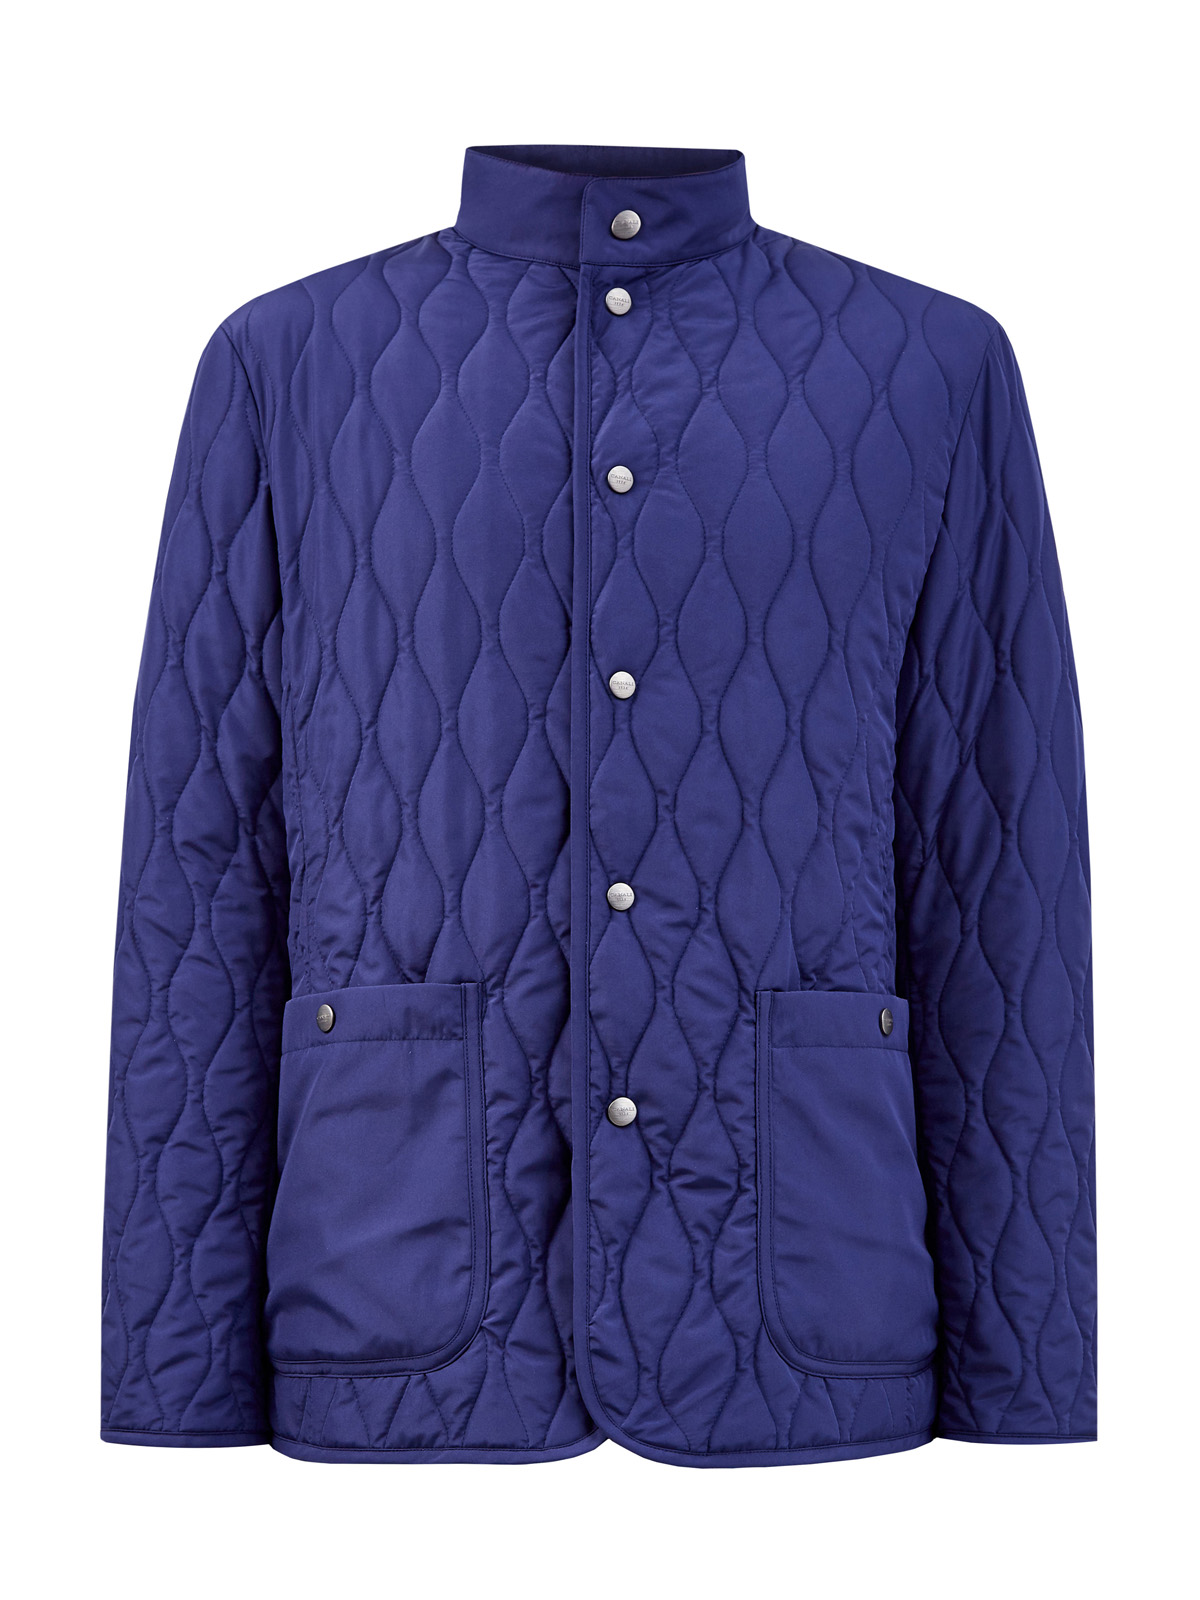 Стеганая куртка из водонепроницаемого нейлона Rain Protection CANALI, цвет синий, размер 52;54;56;58;50 - фото 1